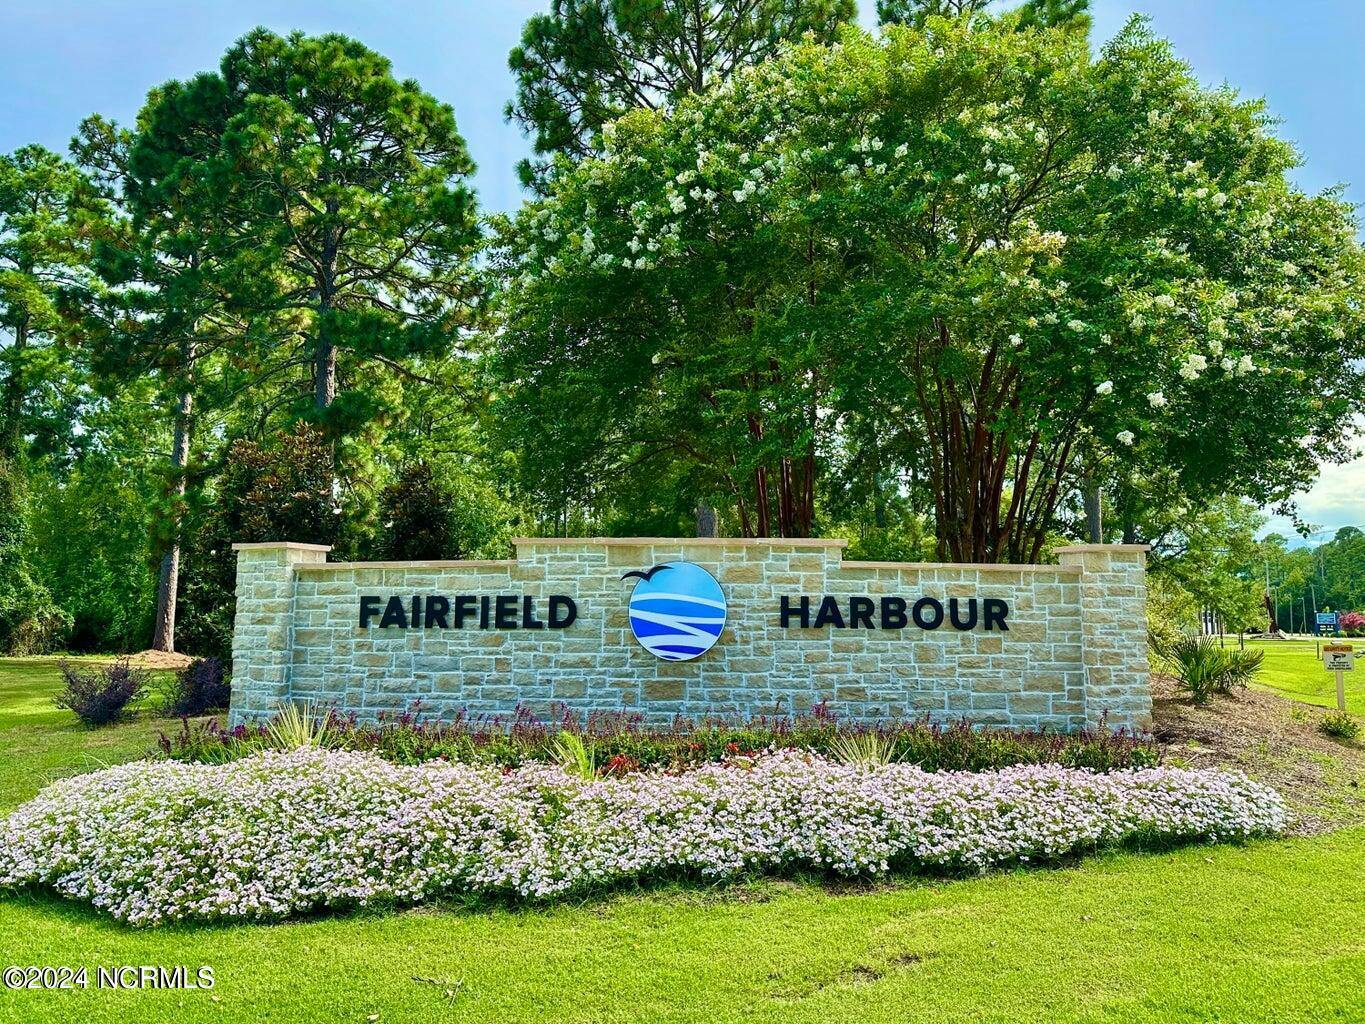 Fairfield Harbour Entrance